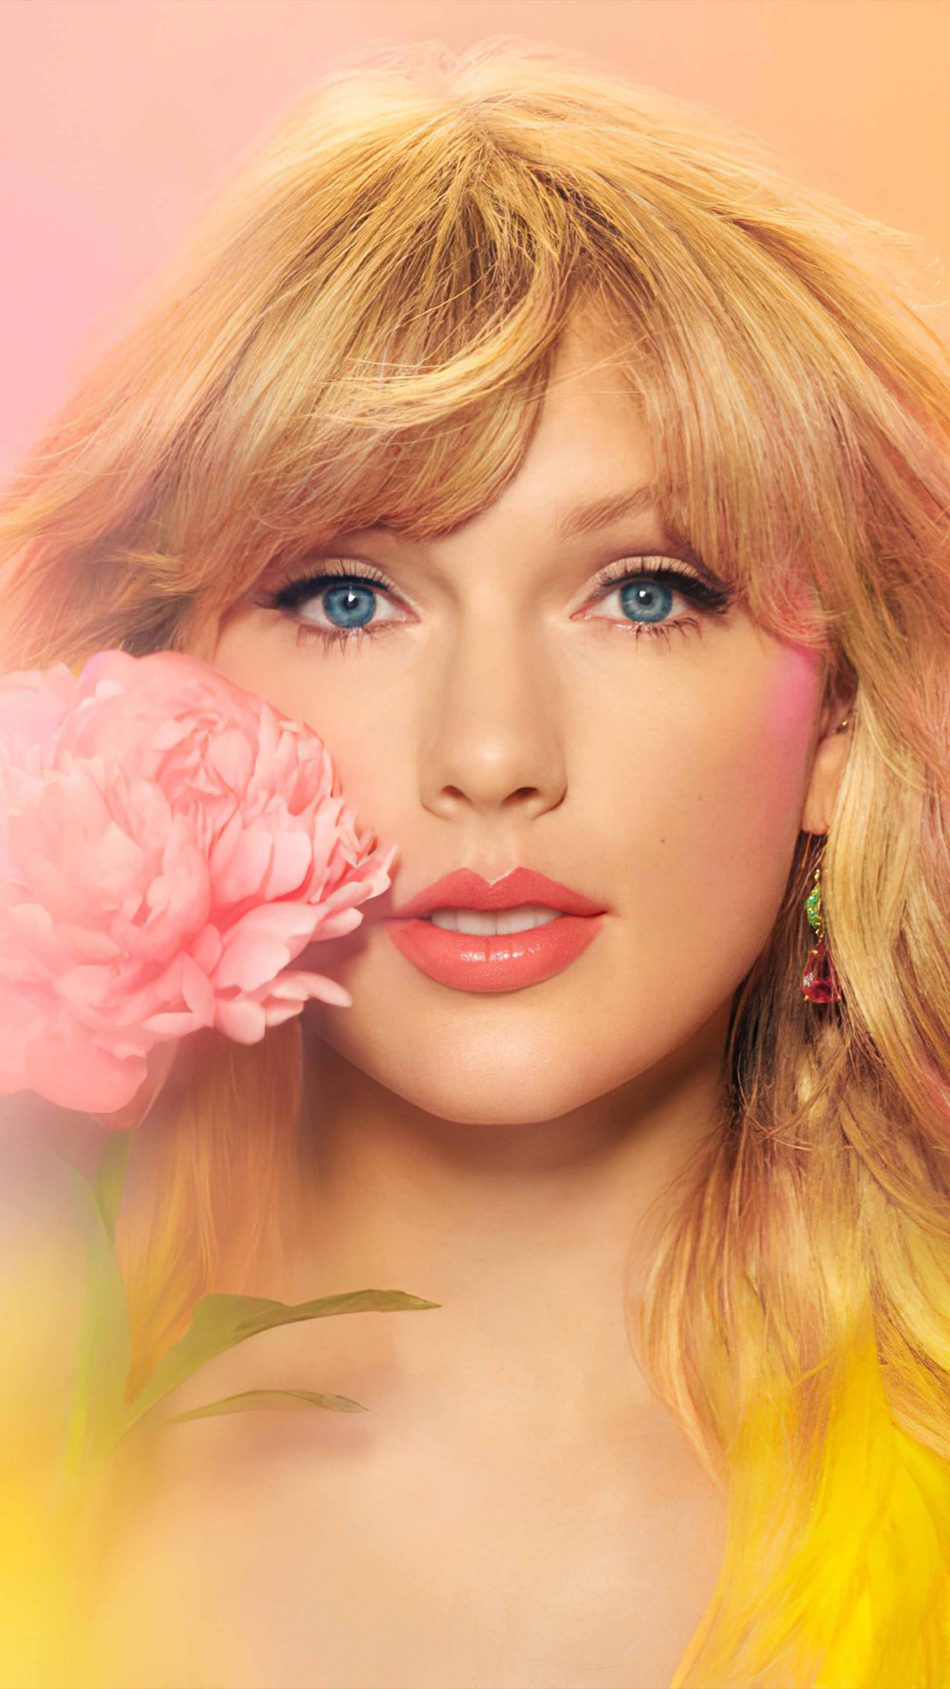 Taylor Swift Popularity